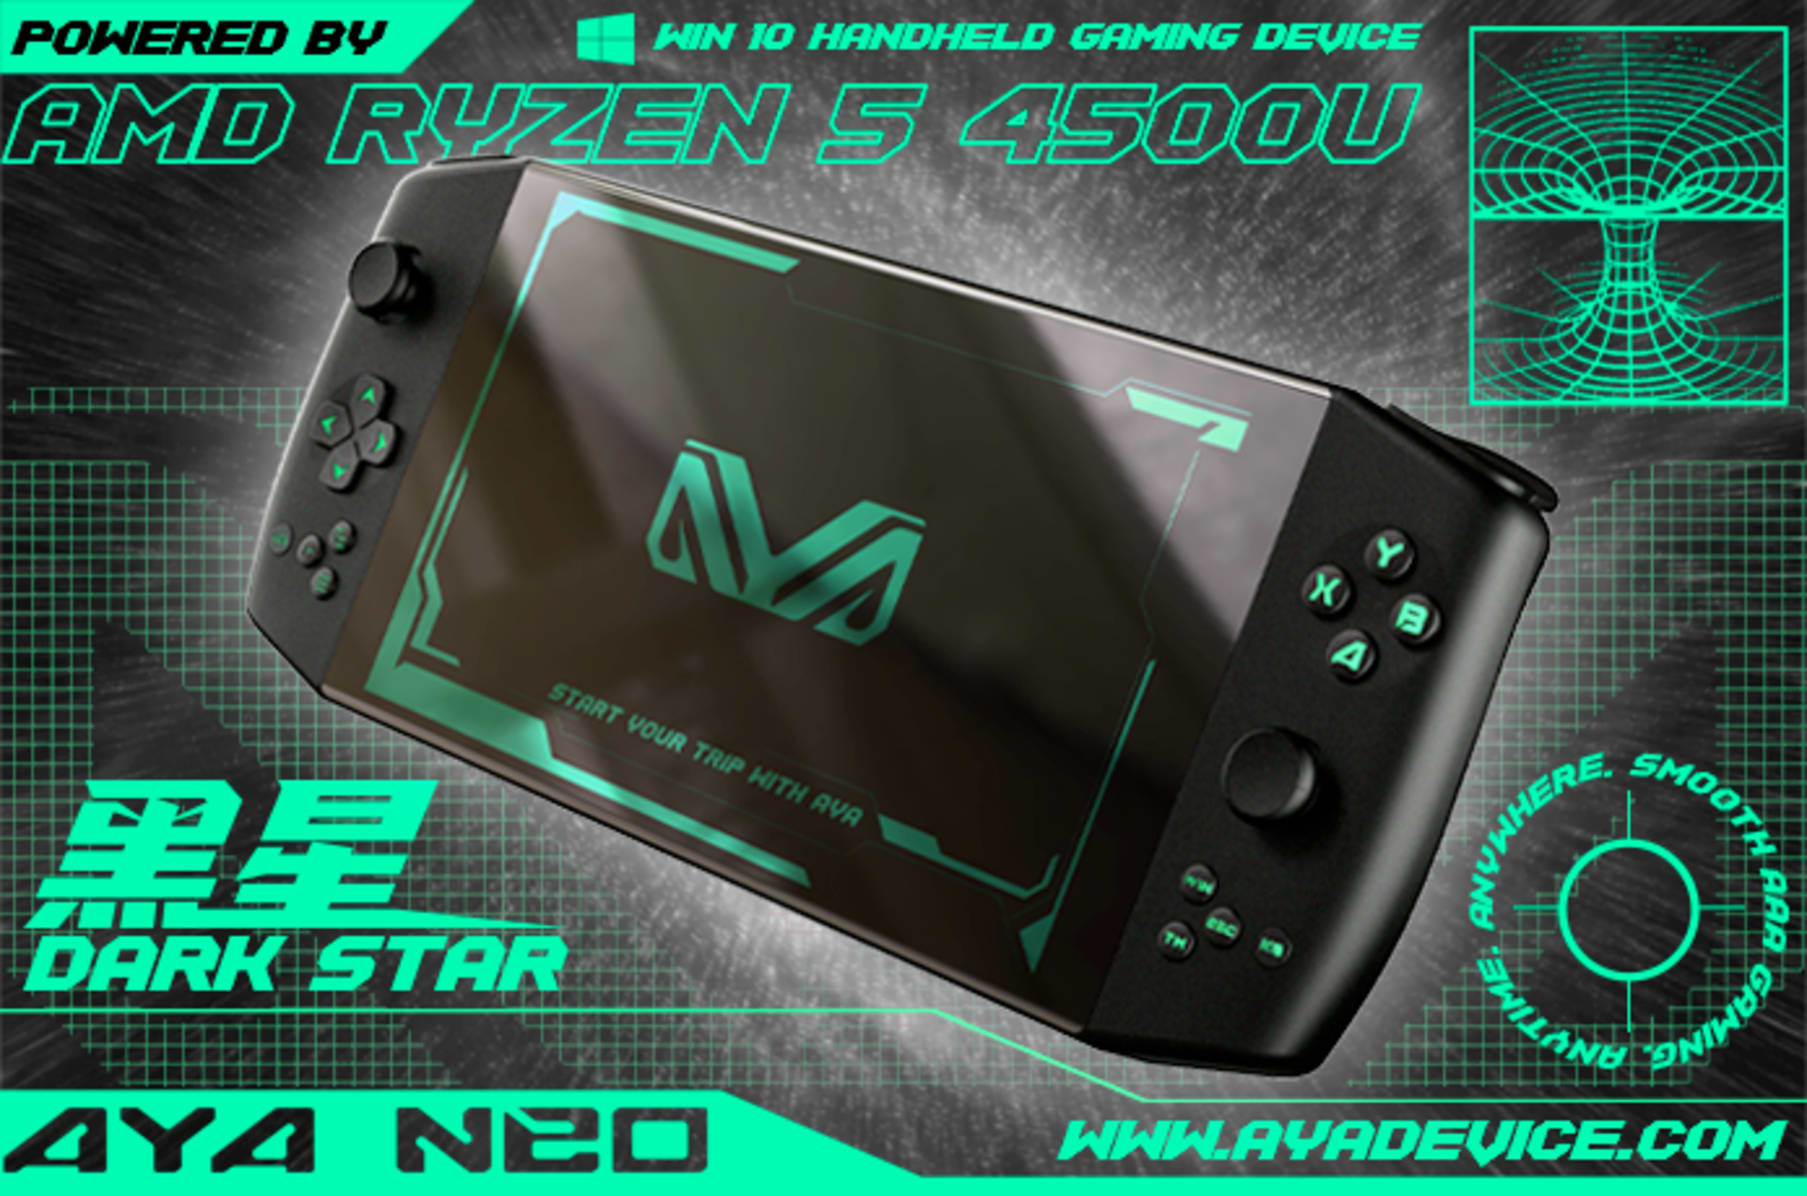 AyaNeo Aya Neo 2021 Pro Light Moon White 4800U Handheld Gaming Console NEW